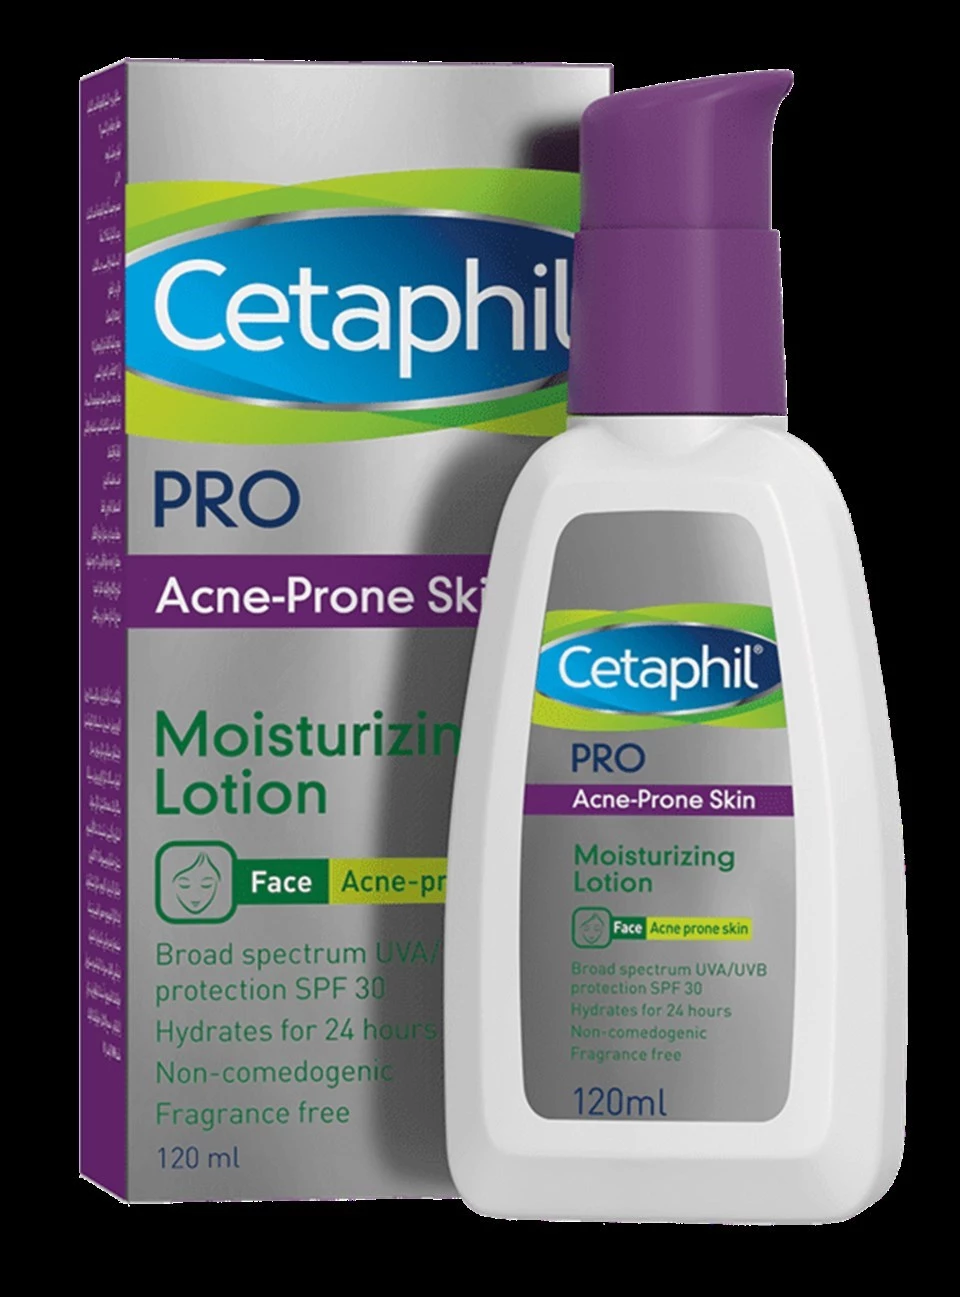 Cetaphil Pro Acne-Prone Skin Moisturizing Lotion - 120ml